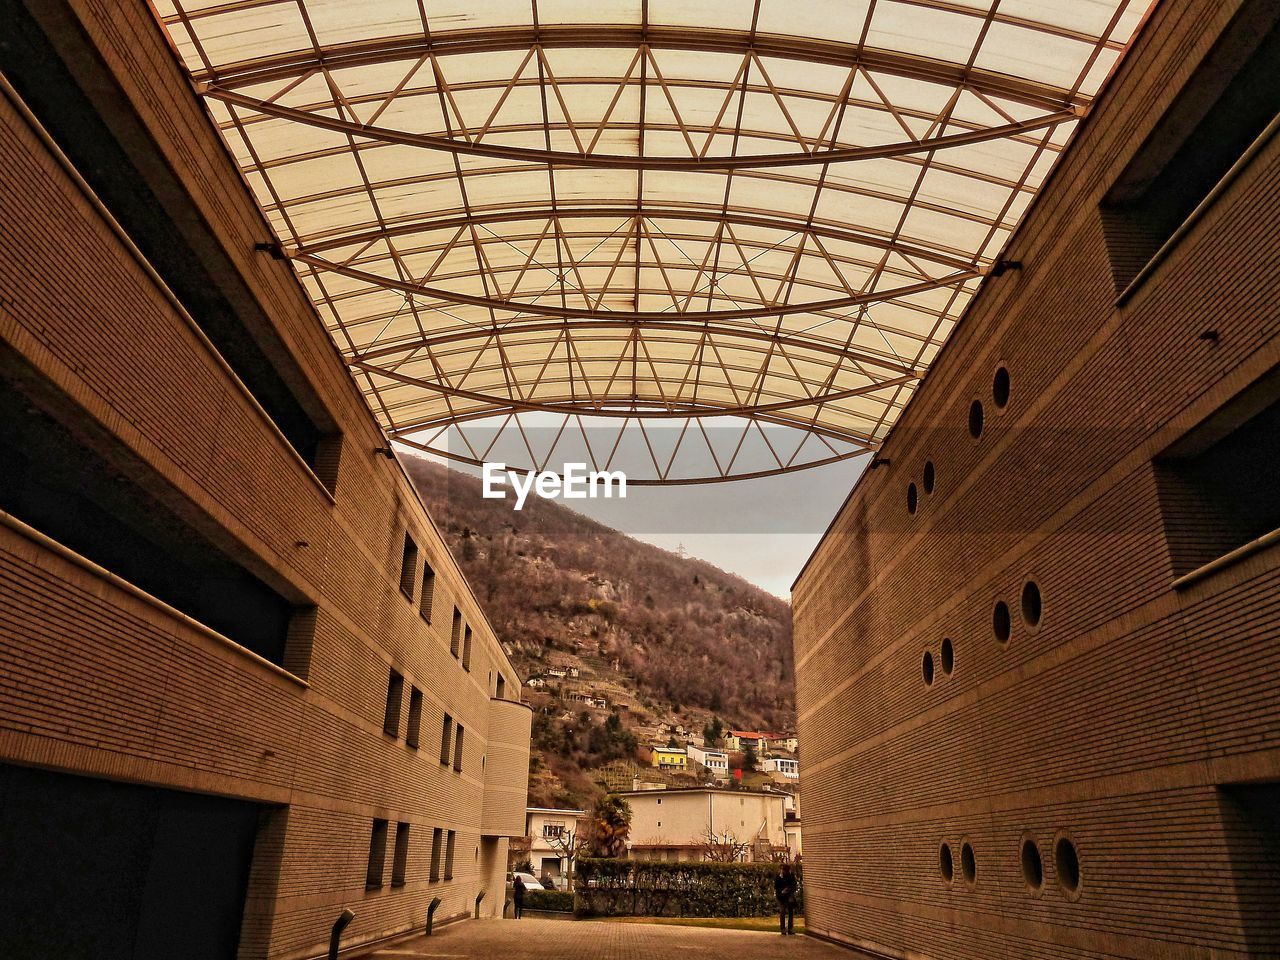 Corridor of modern building